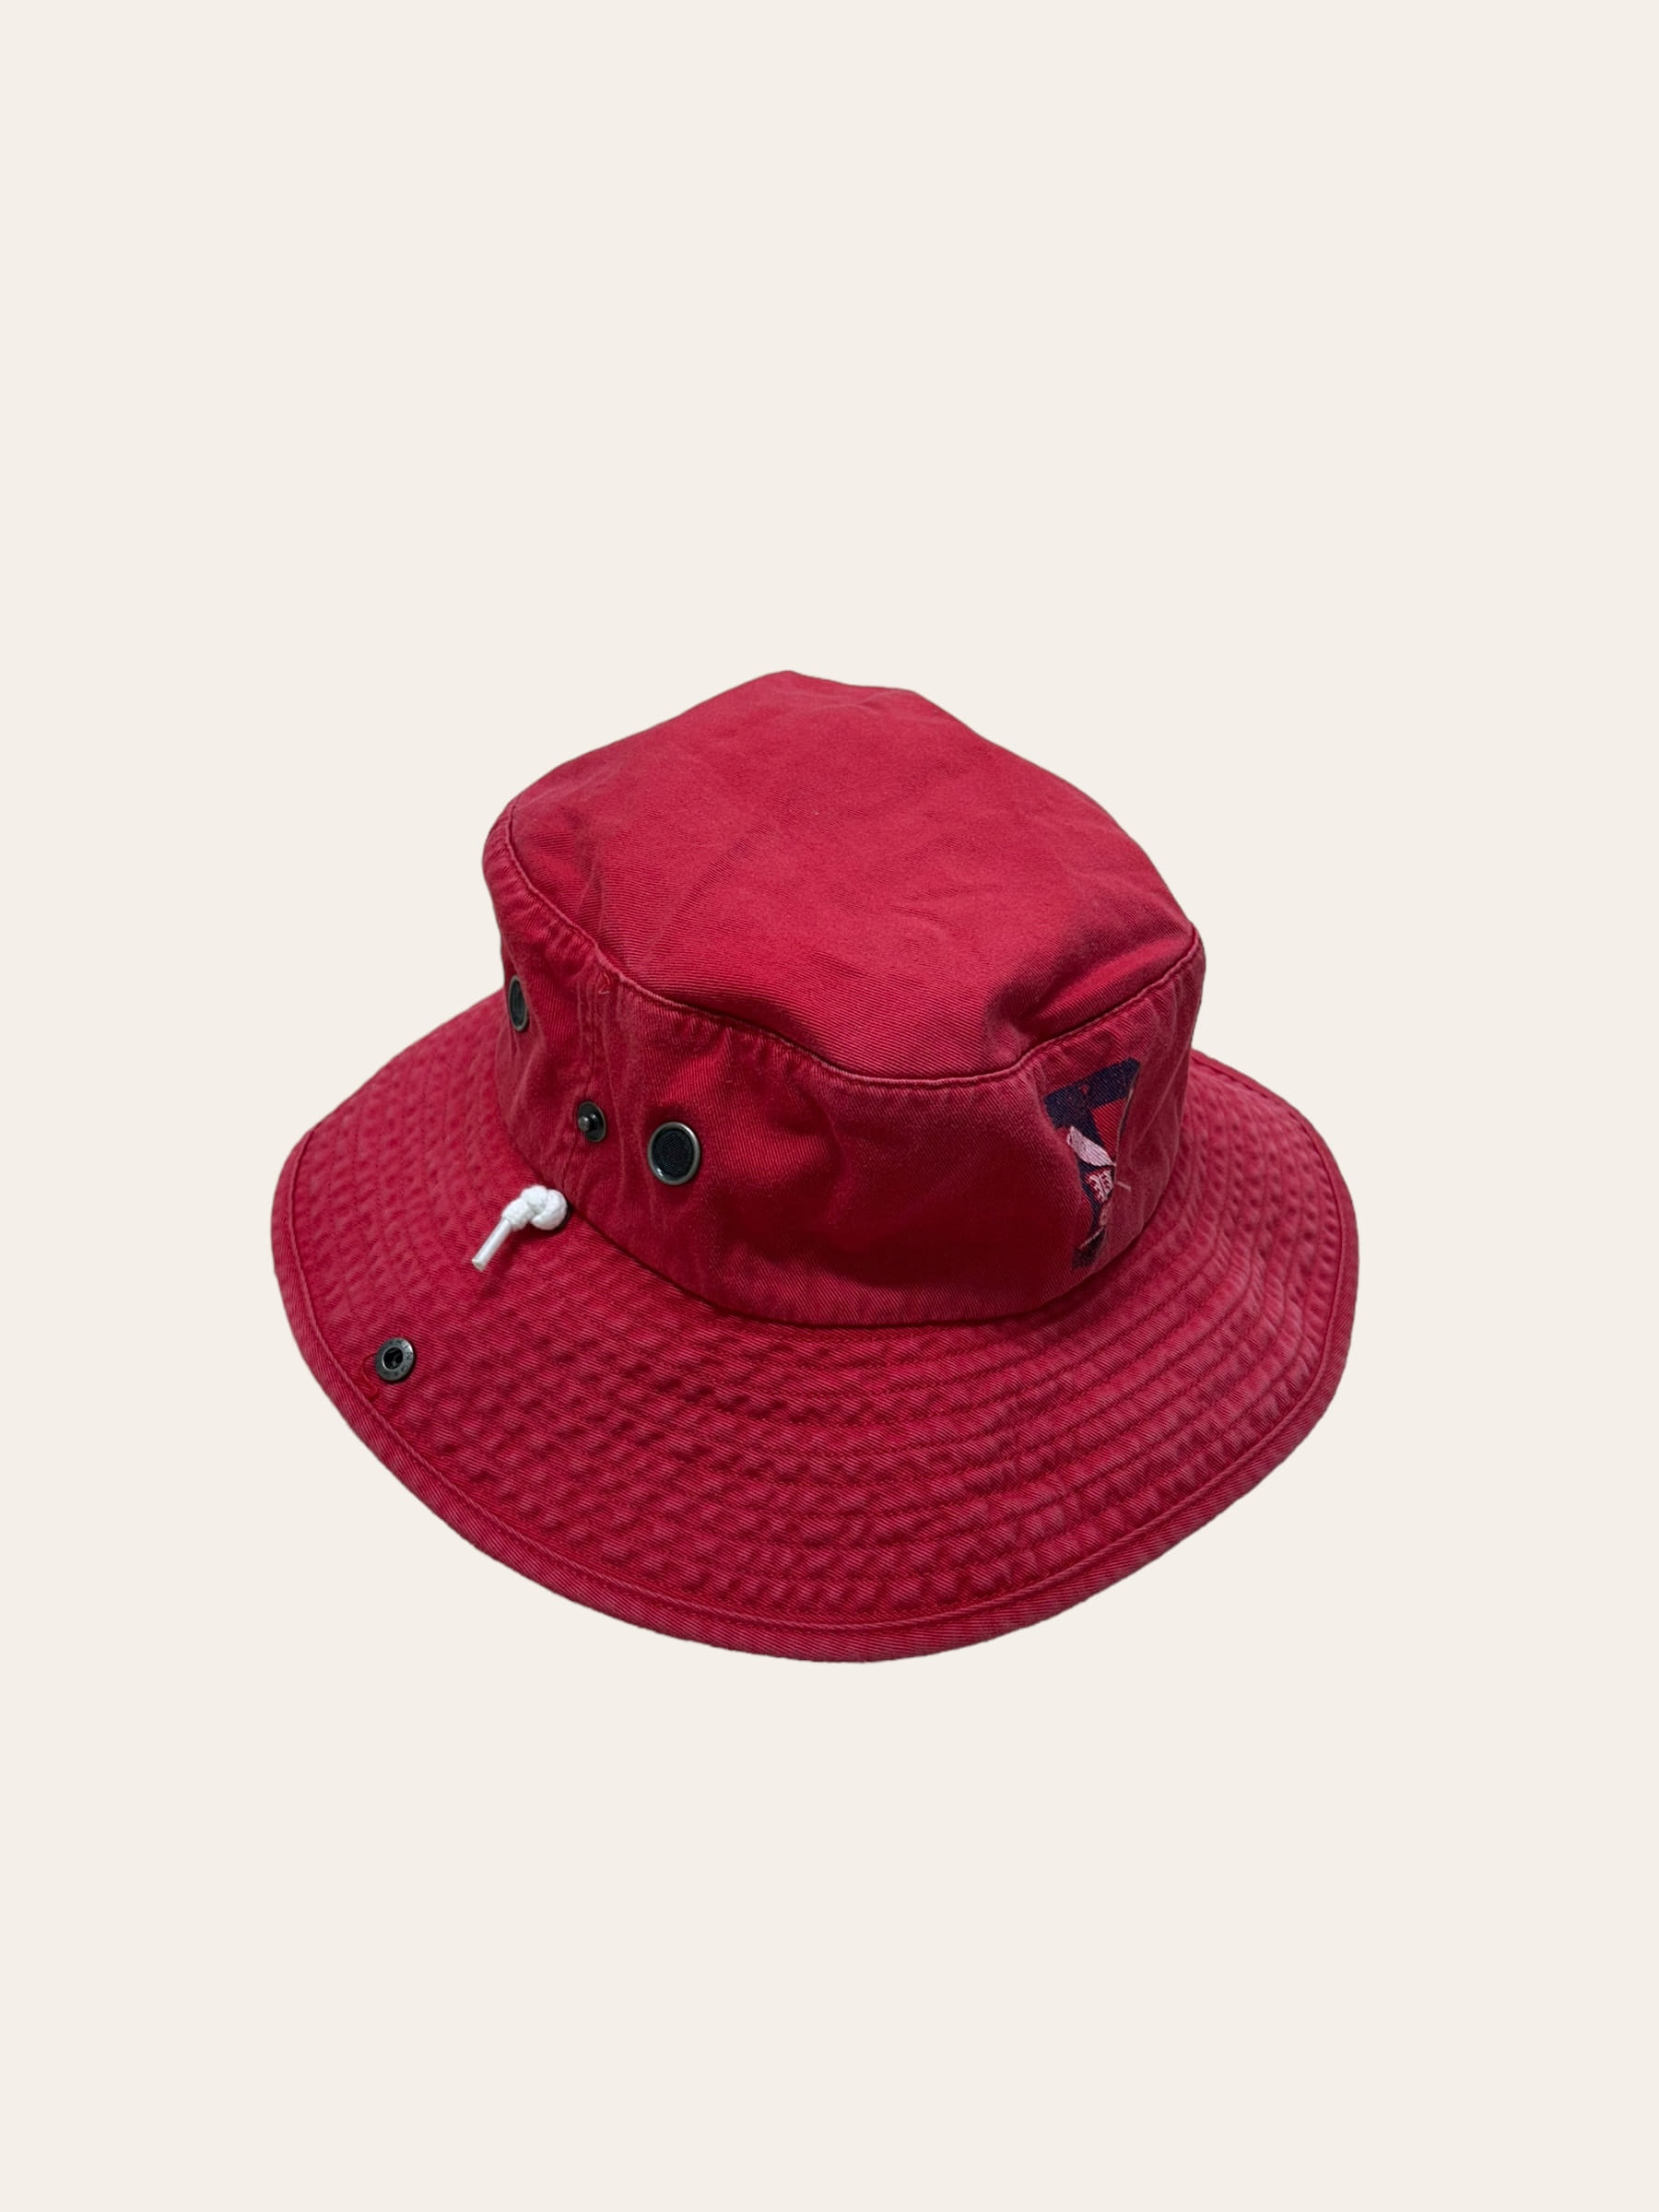 Polo ralph lauren red color P logo stencil bucket hat L/XL